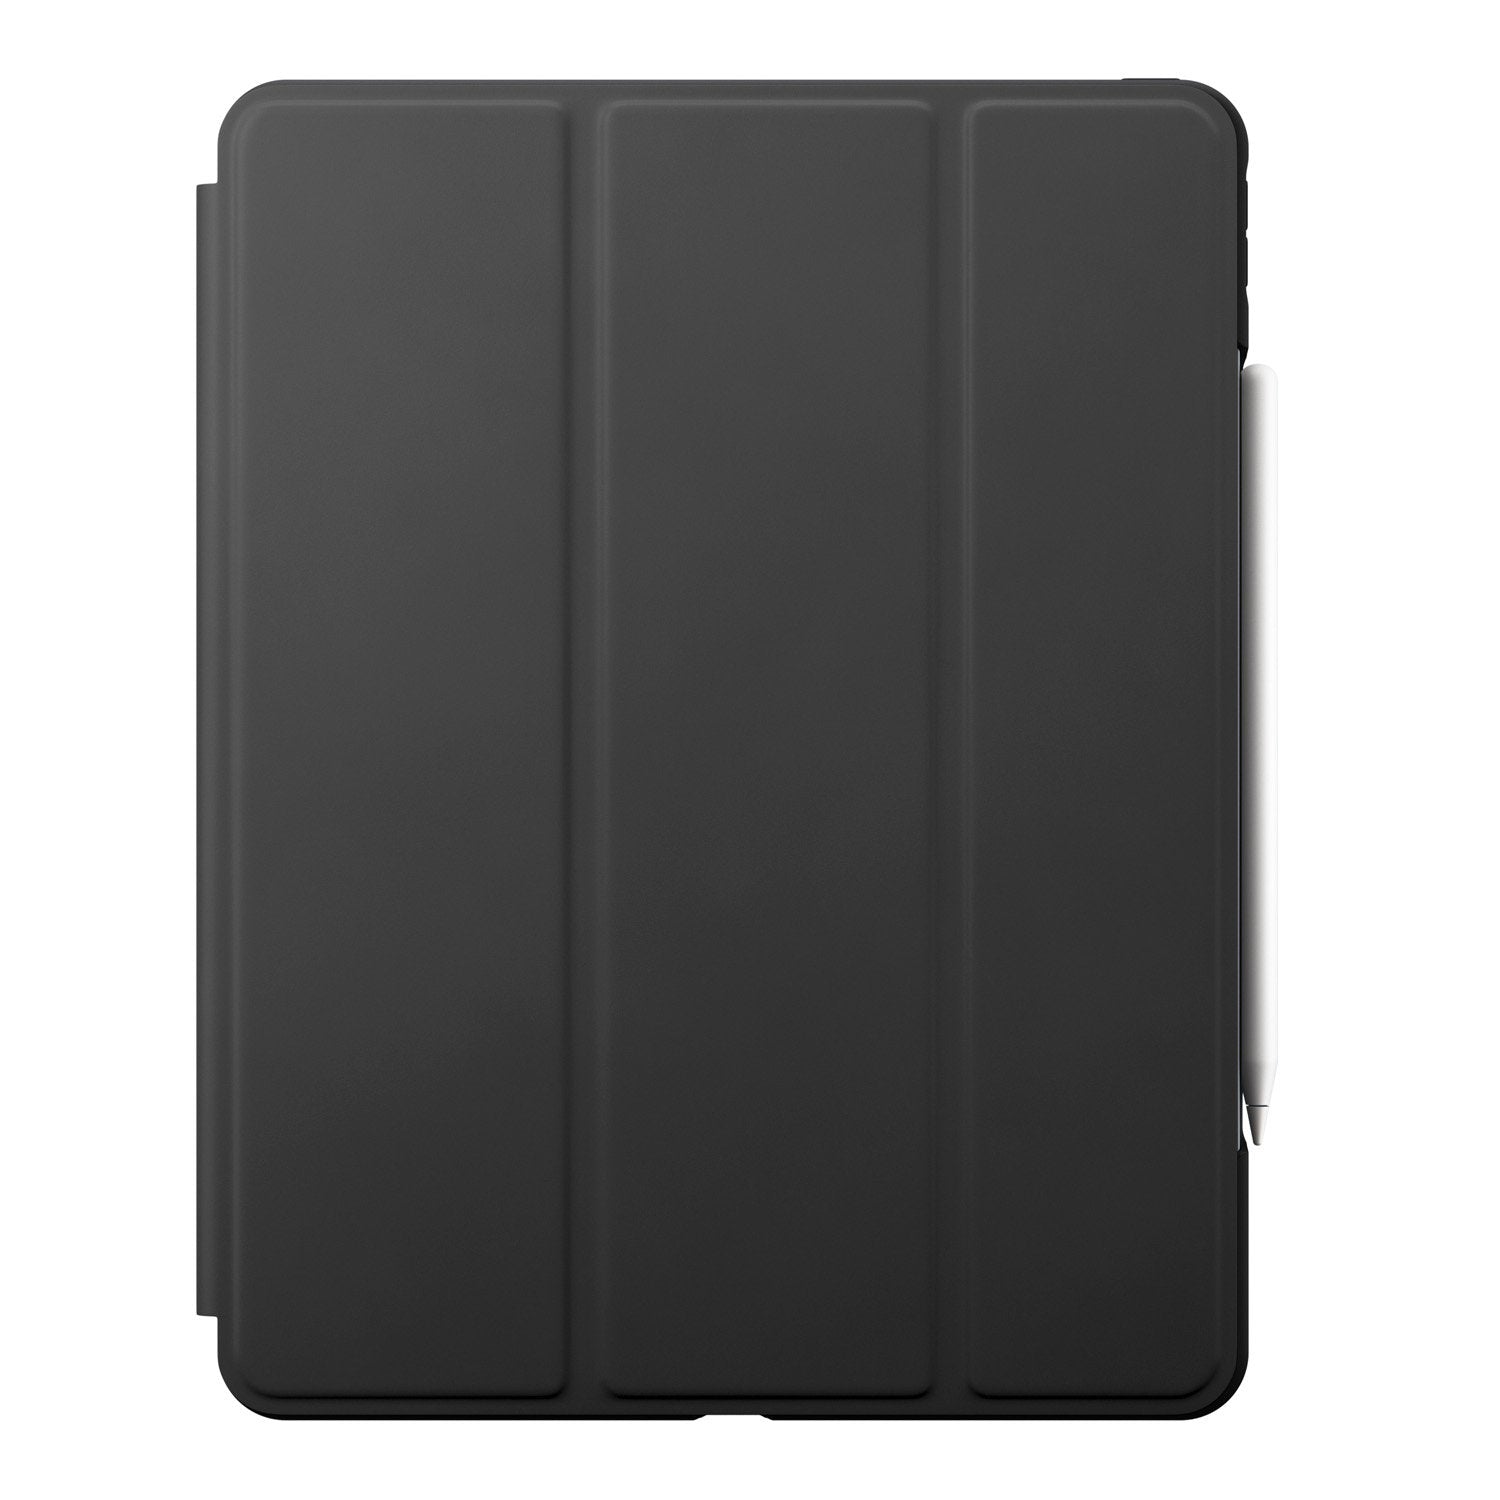 NOMAD Rugged Folio PU Leather Case for iPad Pro 12.9"(2020), Gray Default NOMAD 